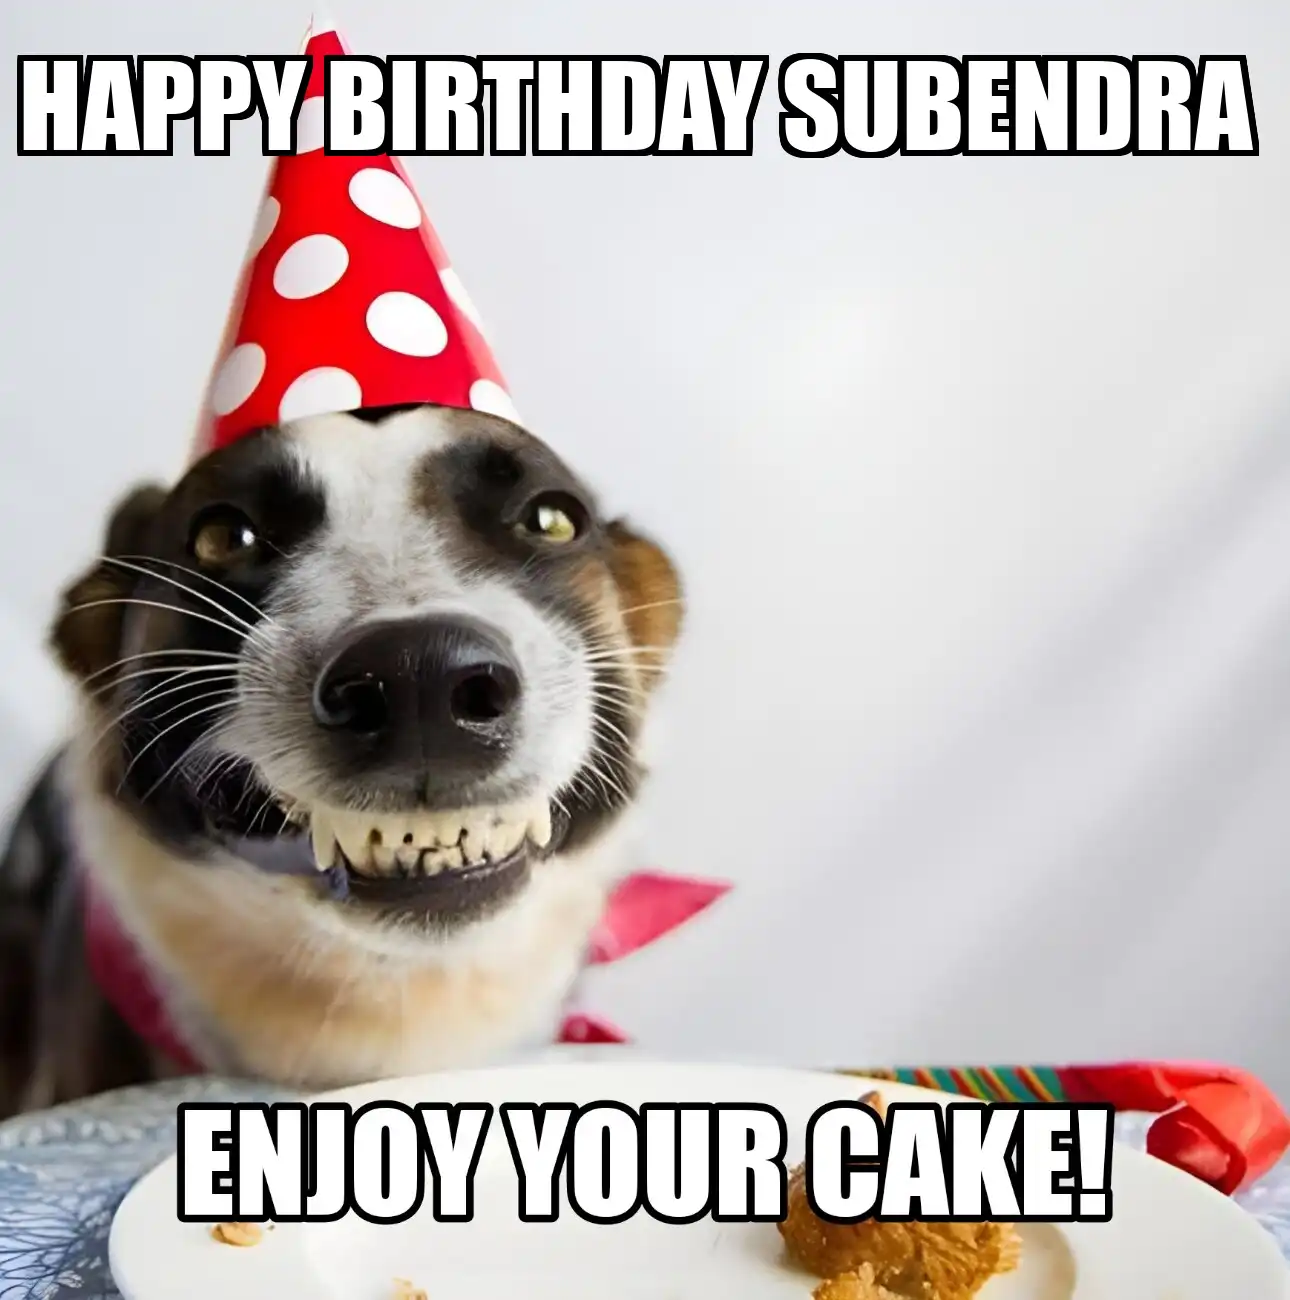 Happy Birthday Subendra Enjoy Your Cake Dog Meme